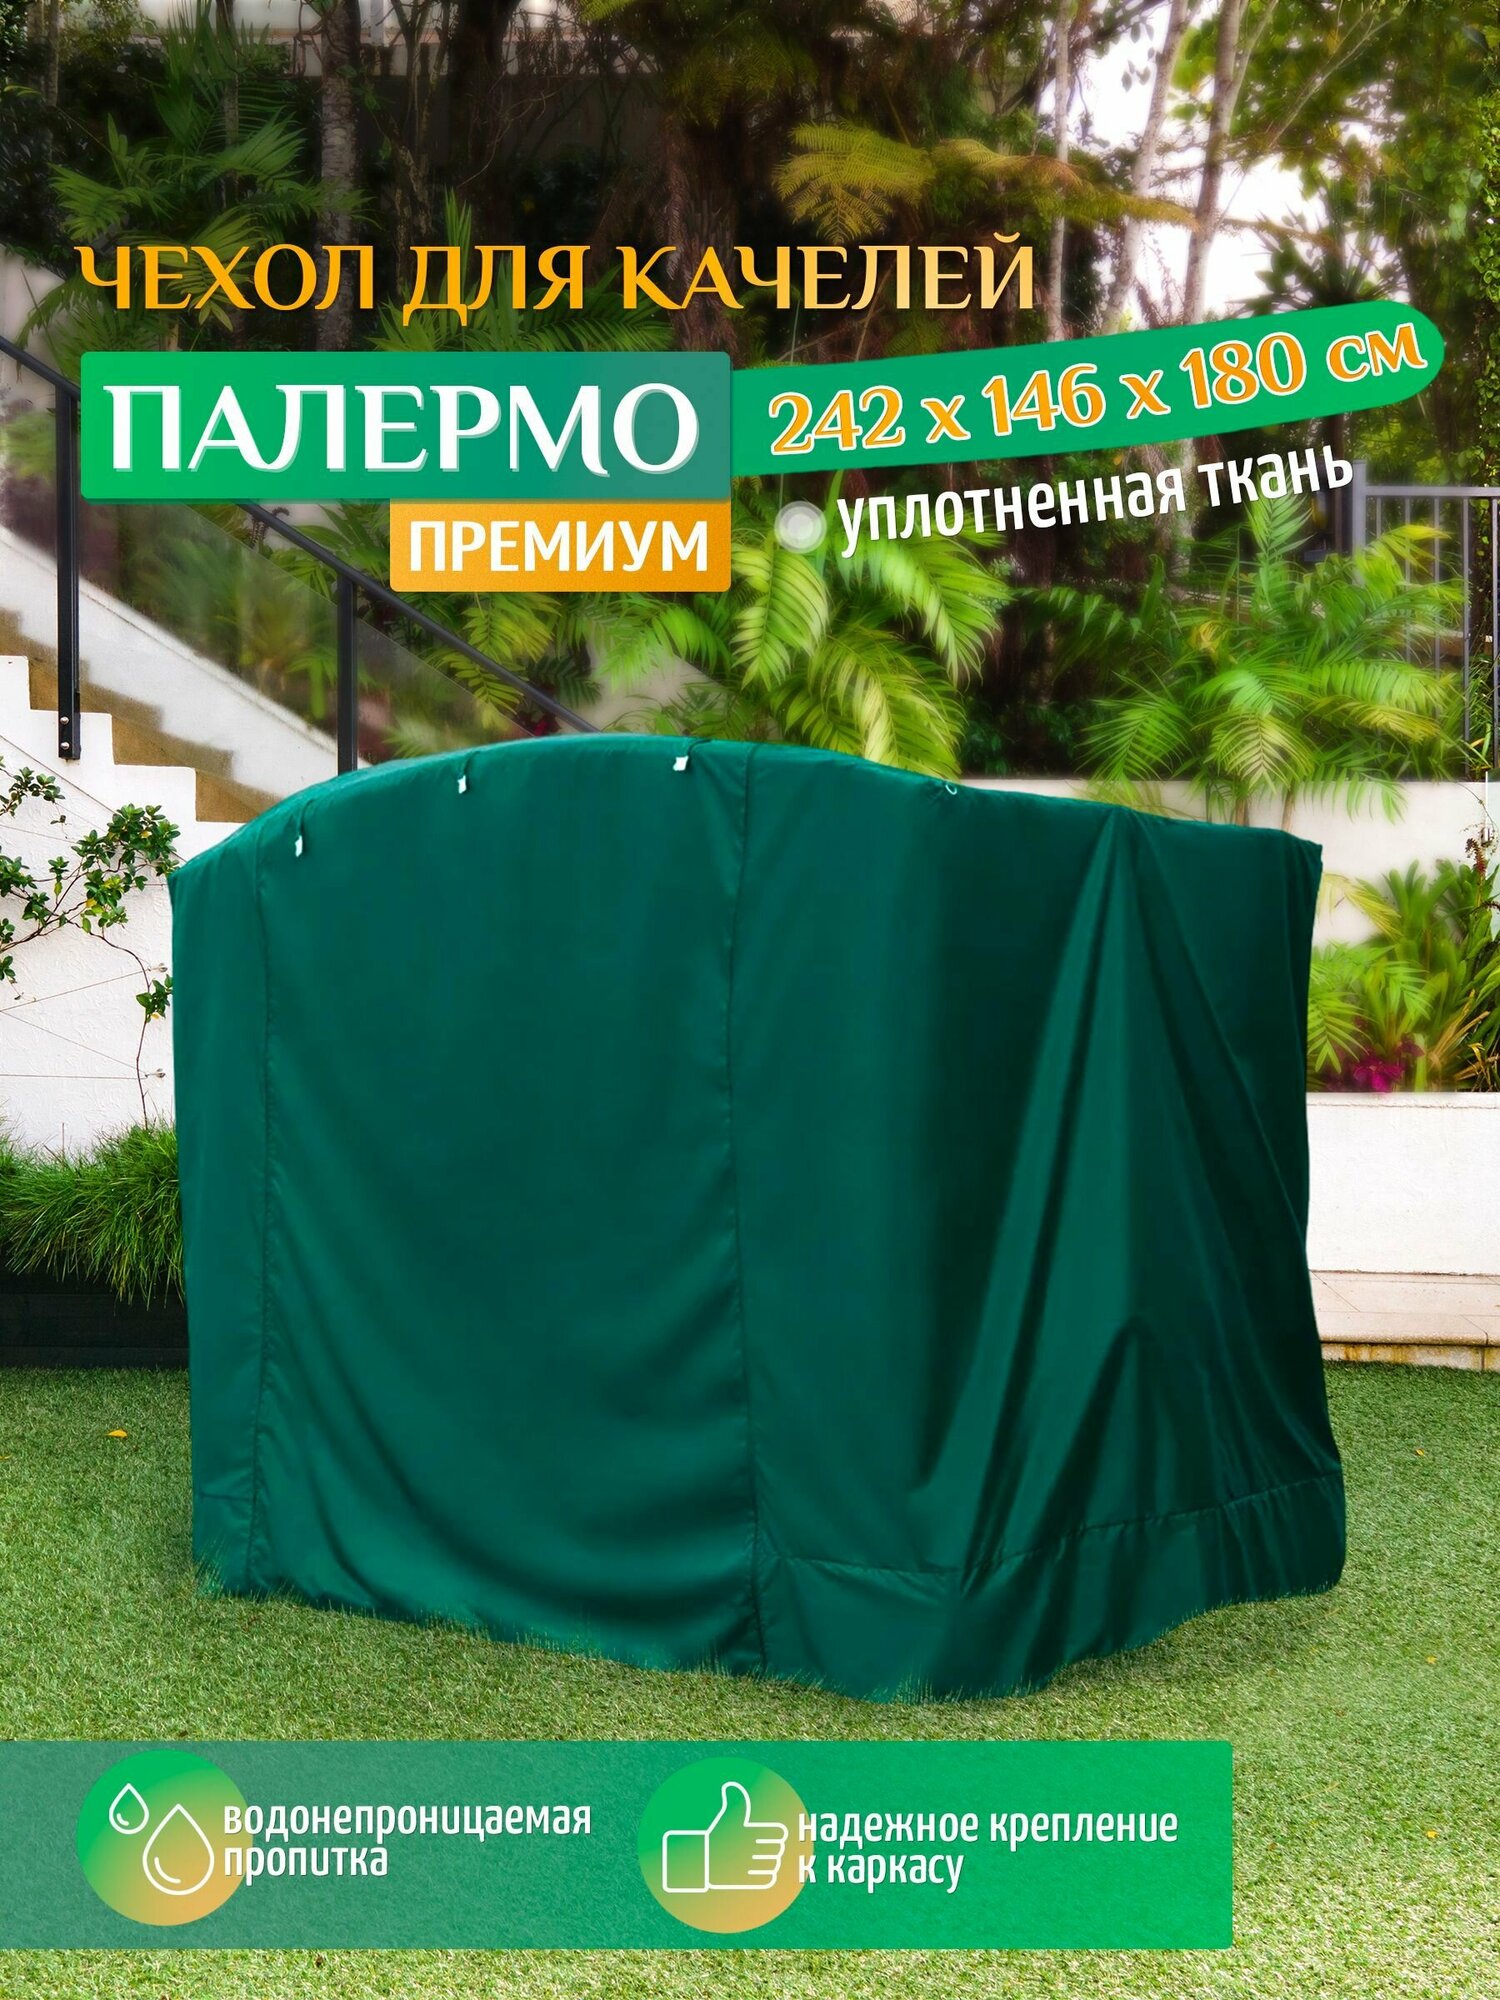 Чехол для качелей Палермо премиум (242х146х180 см) зеленый